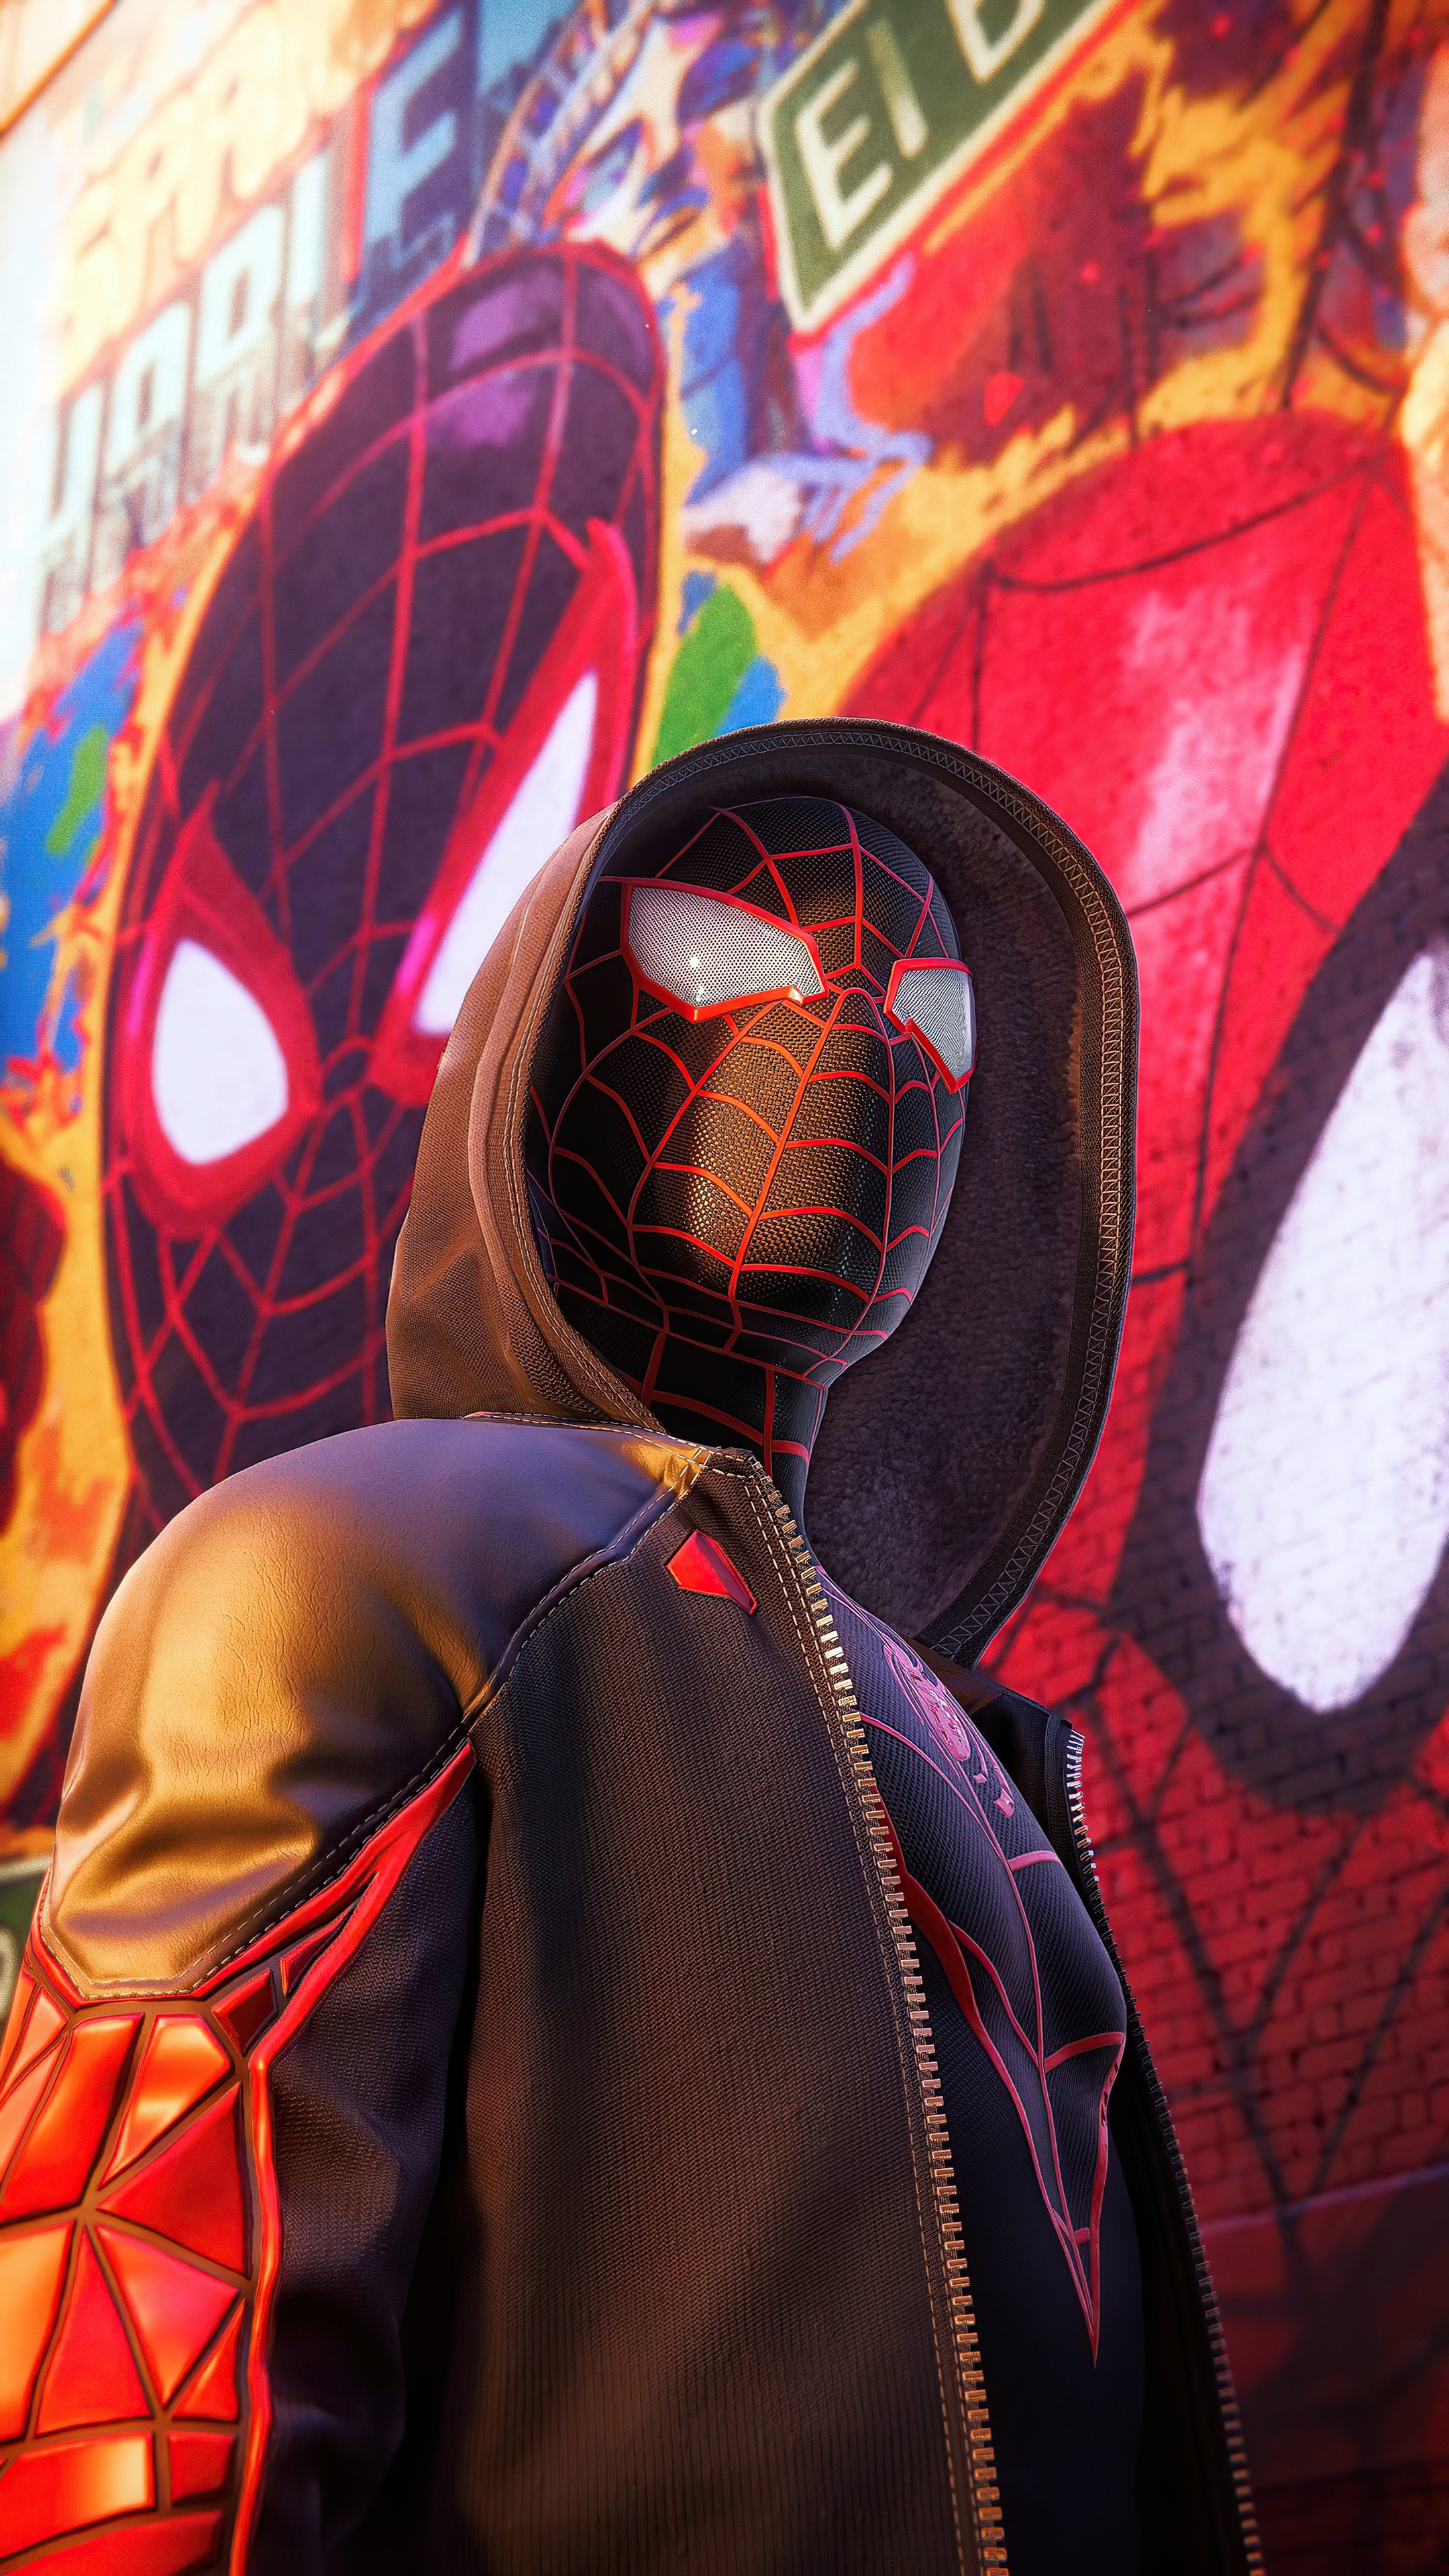 General 2160x3840 Spider-Man black leather jacket graffiti portrait display bodysuit superhero hoods digital art